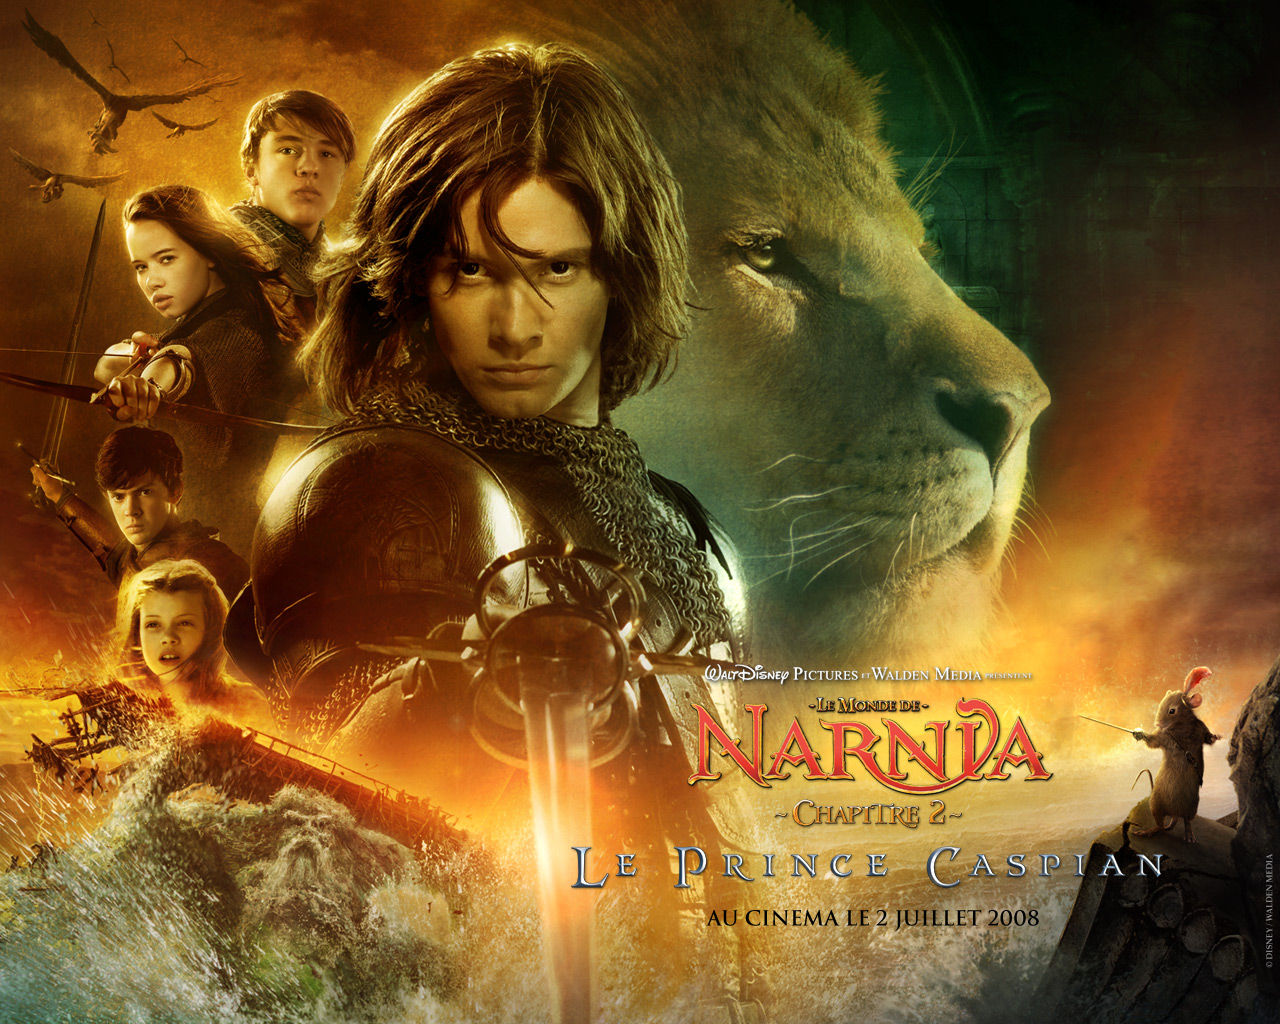  333kB Mazi marathi The Chronicles of Narnia Prince Caspian hindi